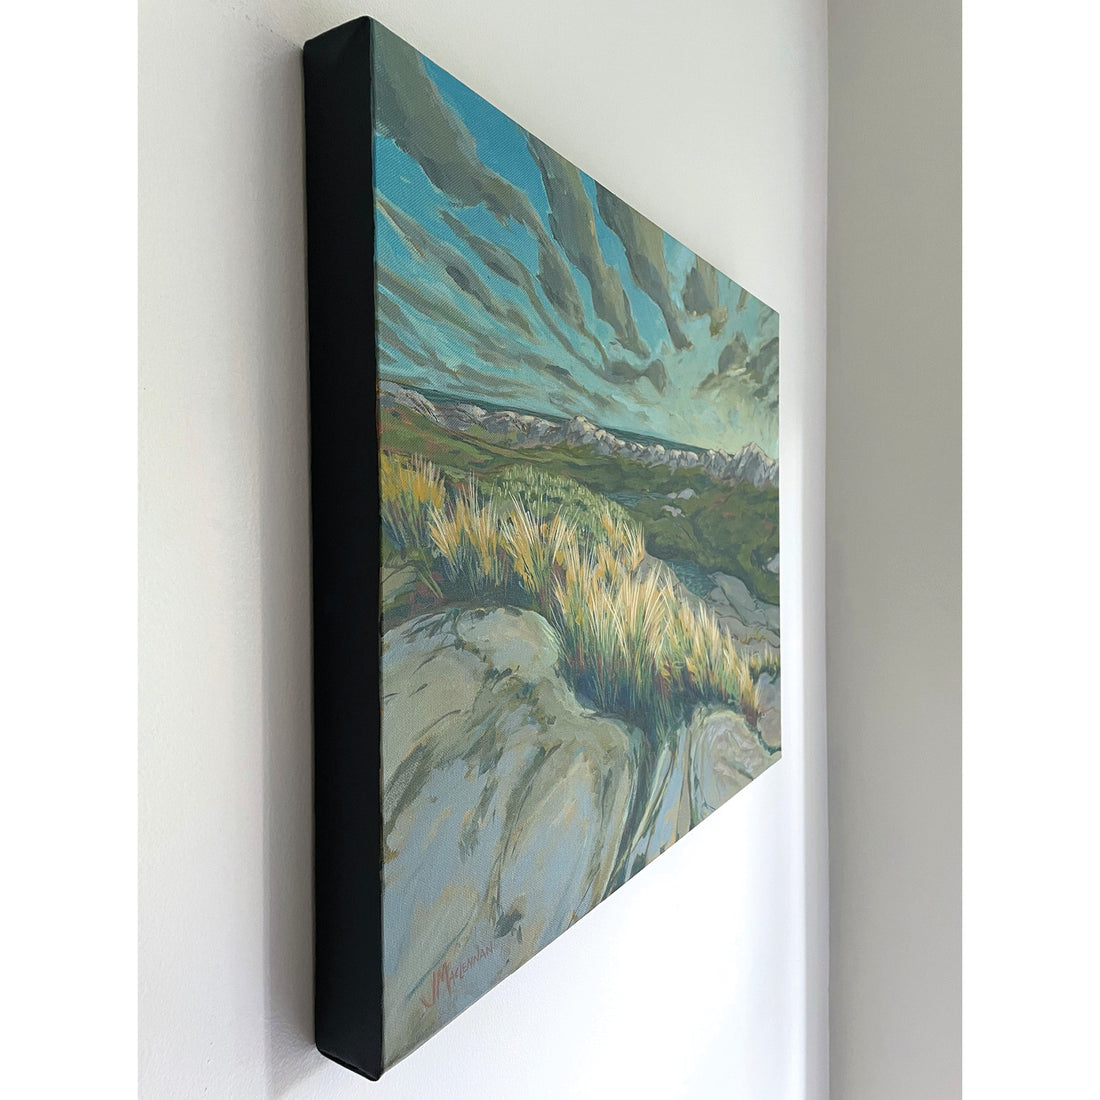 Joanne MacLennan "Abundant Spaces" landscape painting Canadian Artist